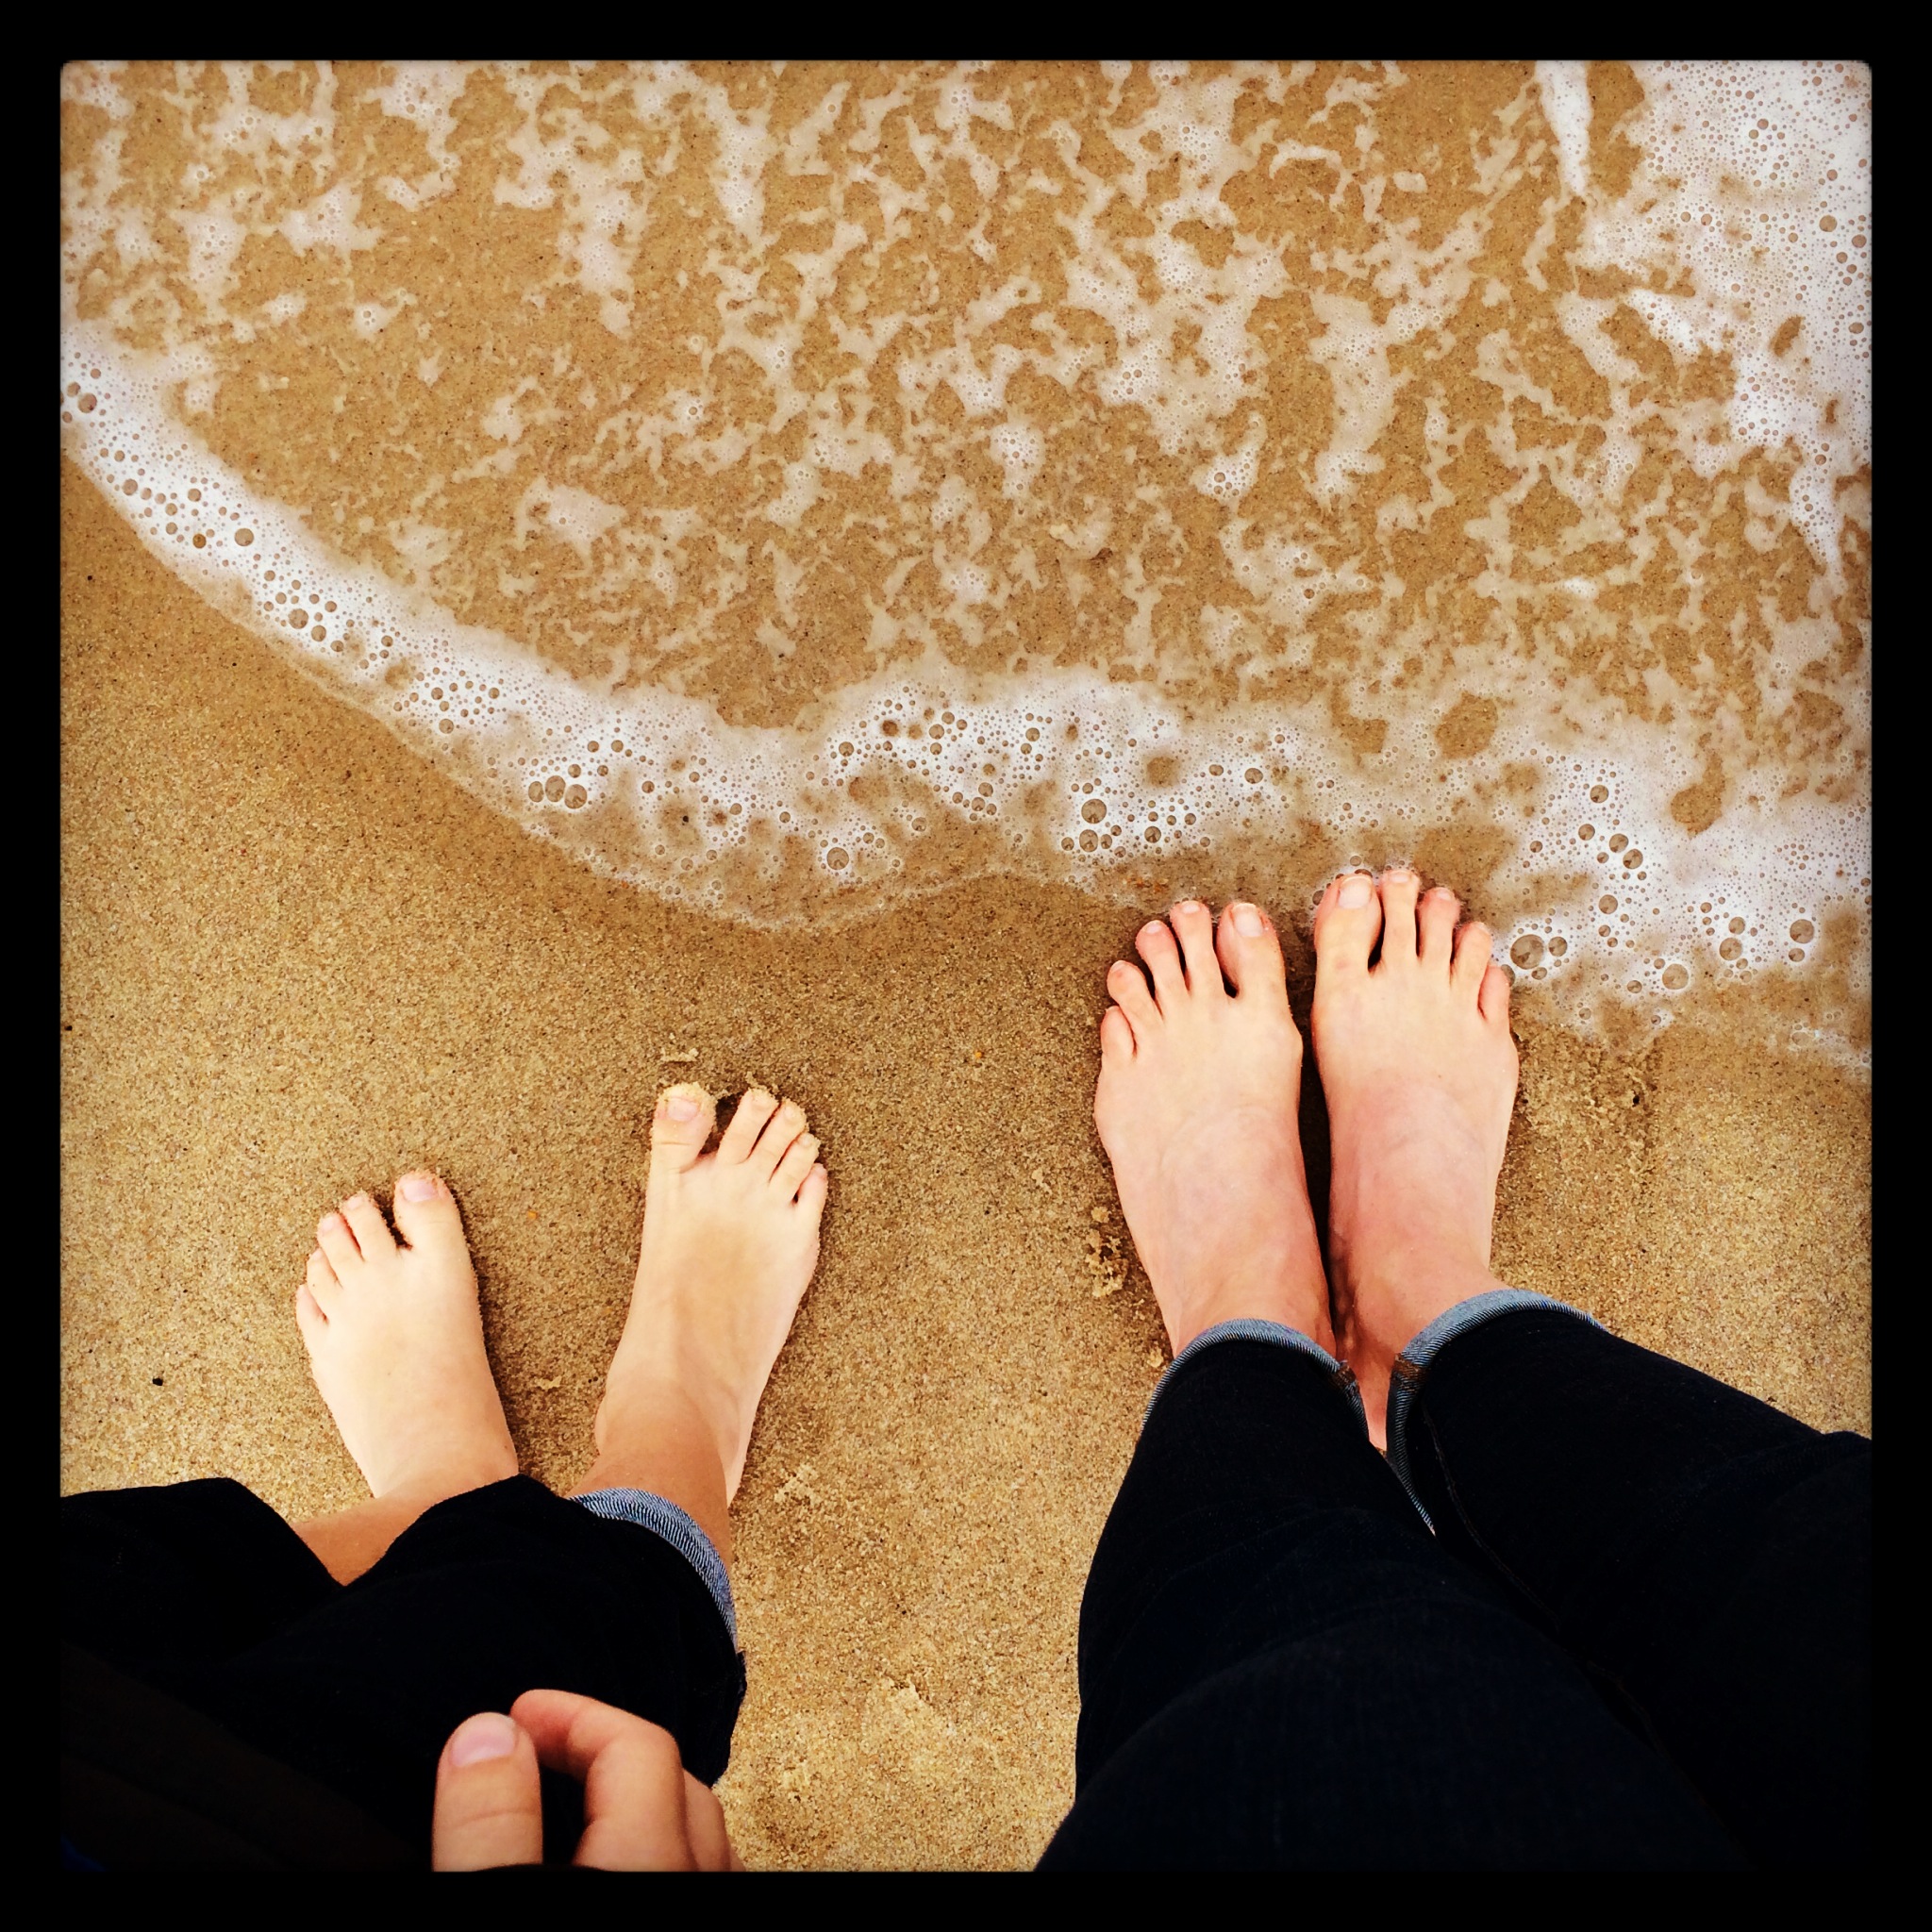 20 toes in the Atlantic in October